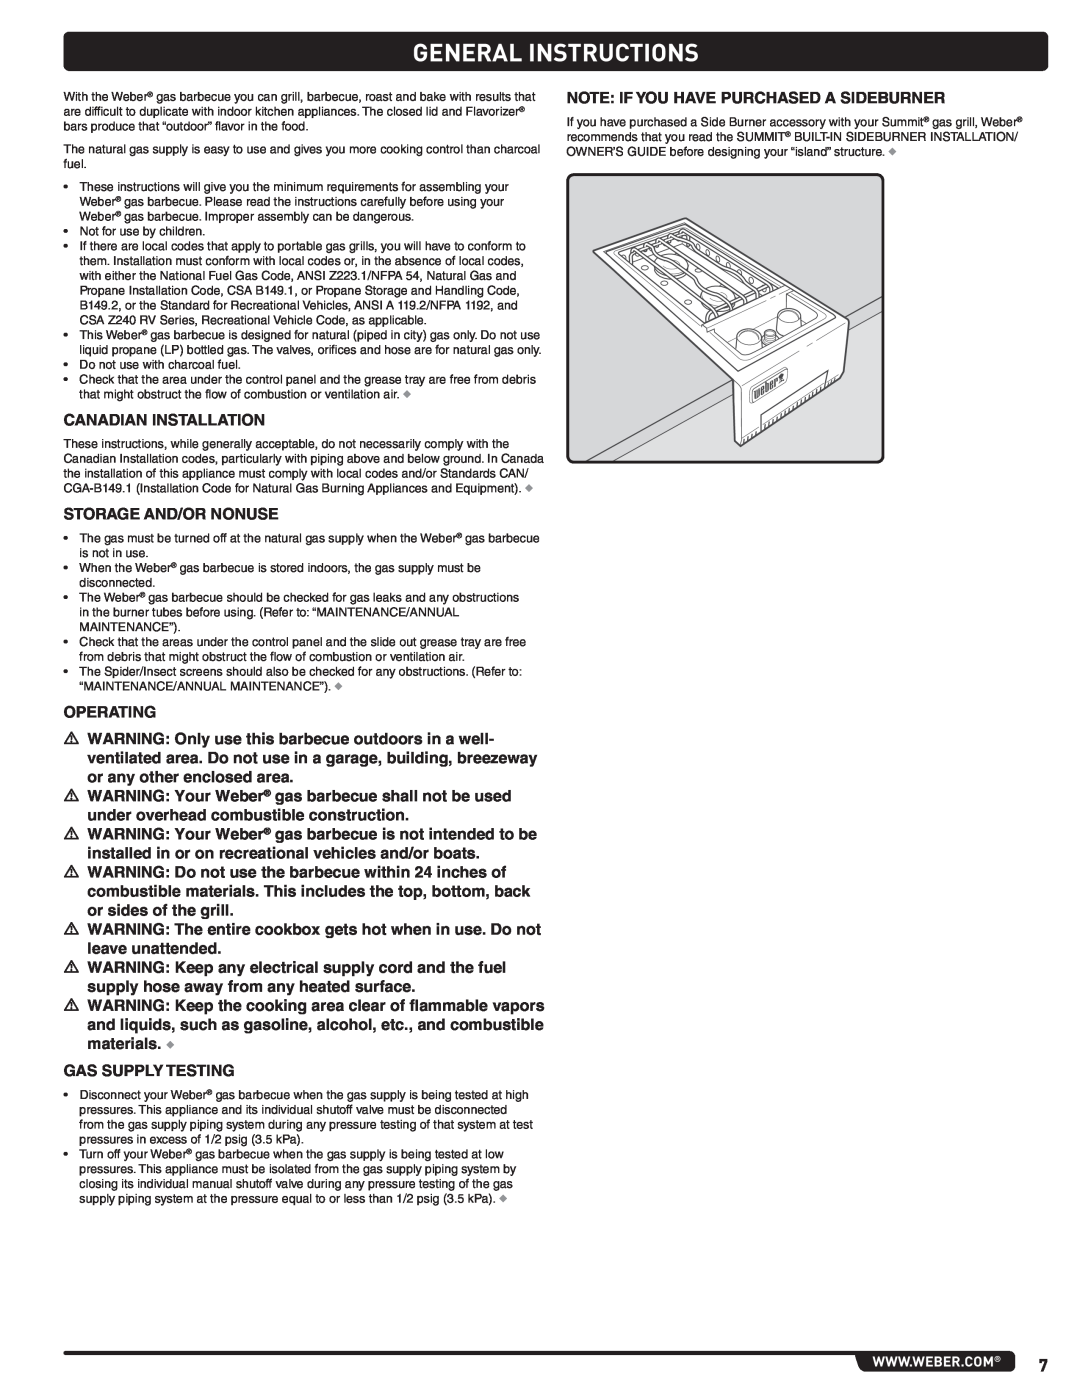 Weber 56576 manual General Instructions 